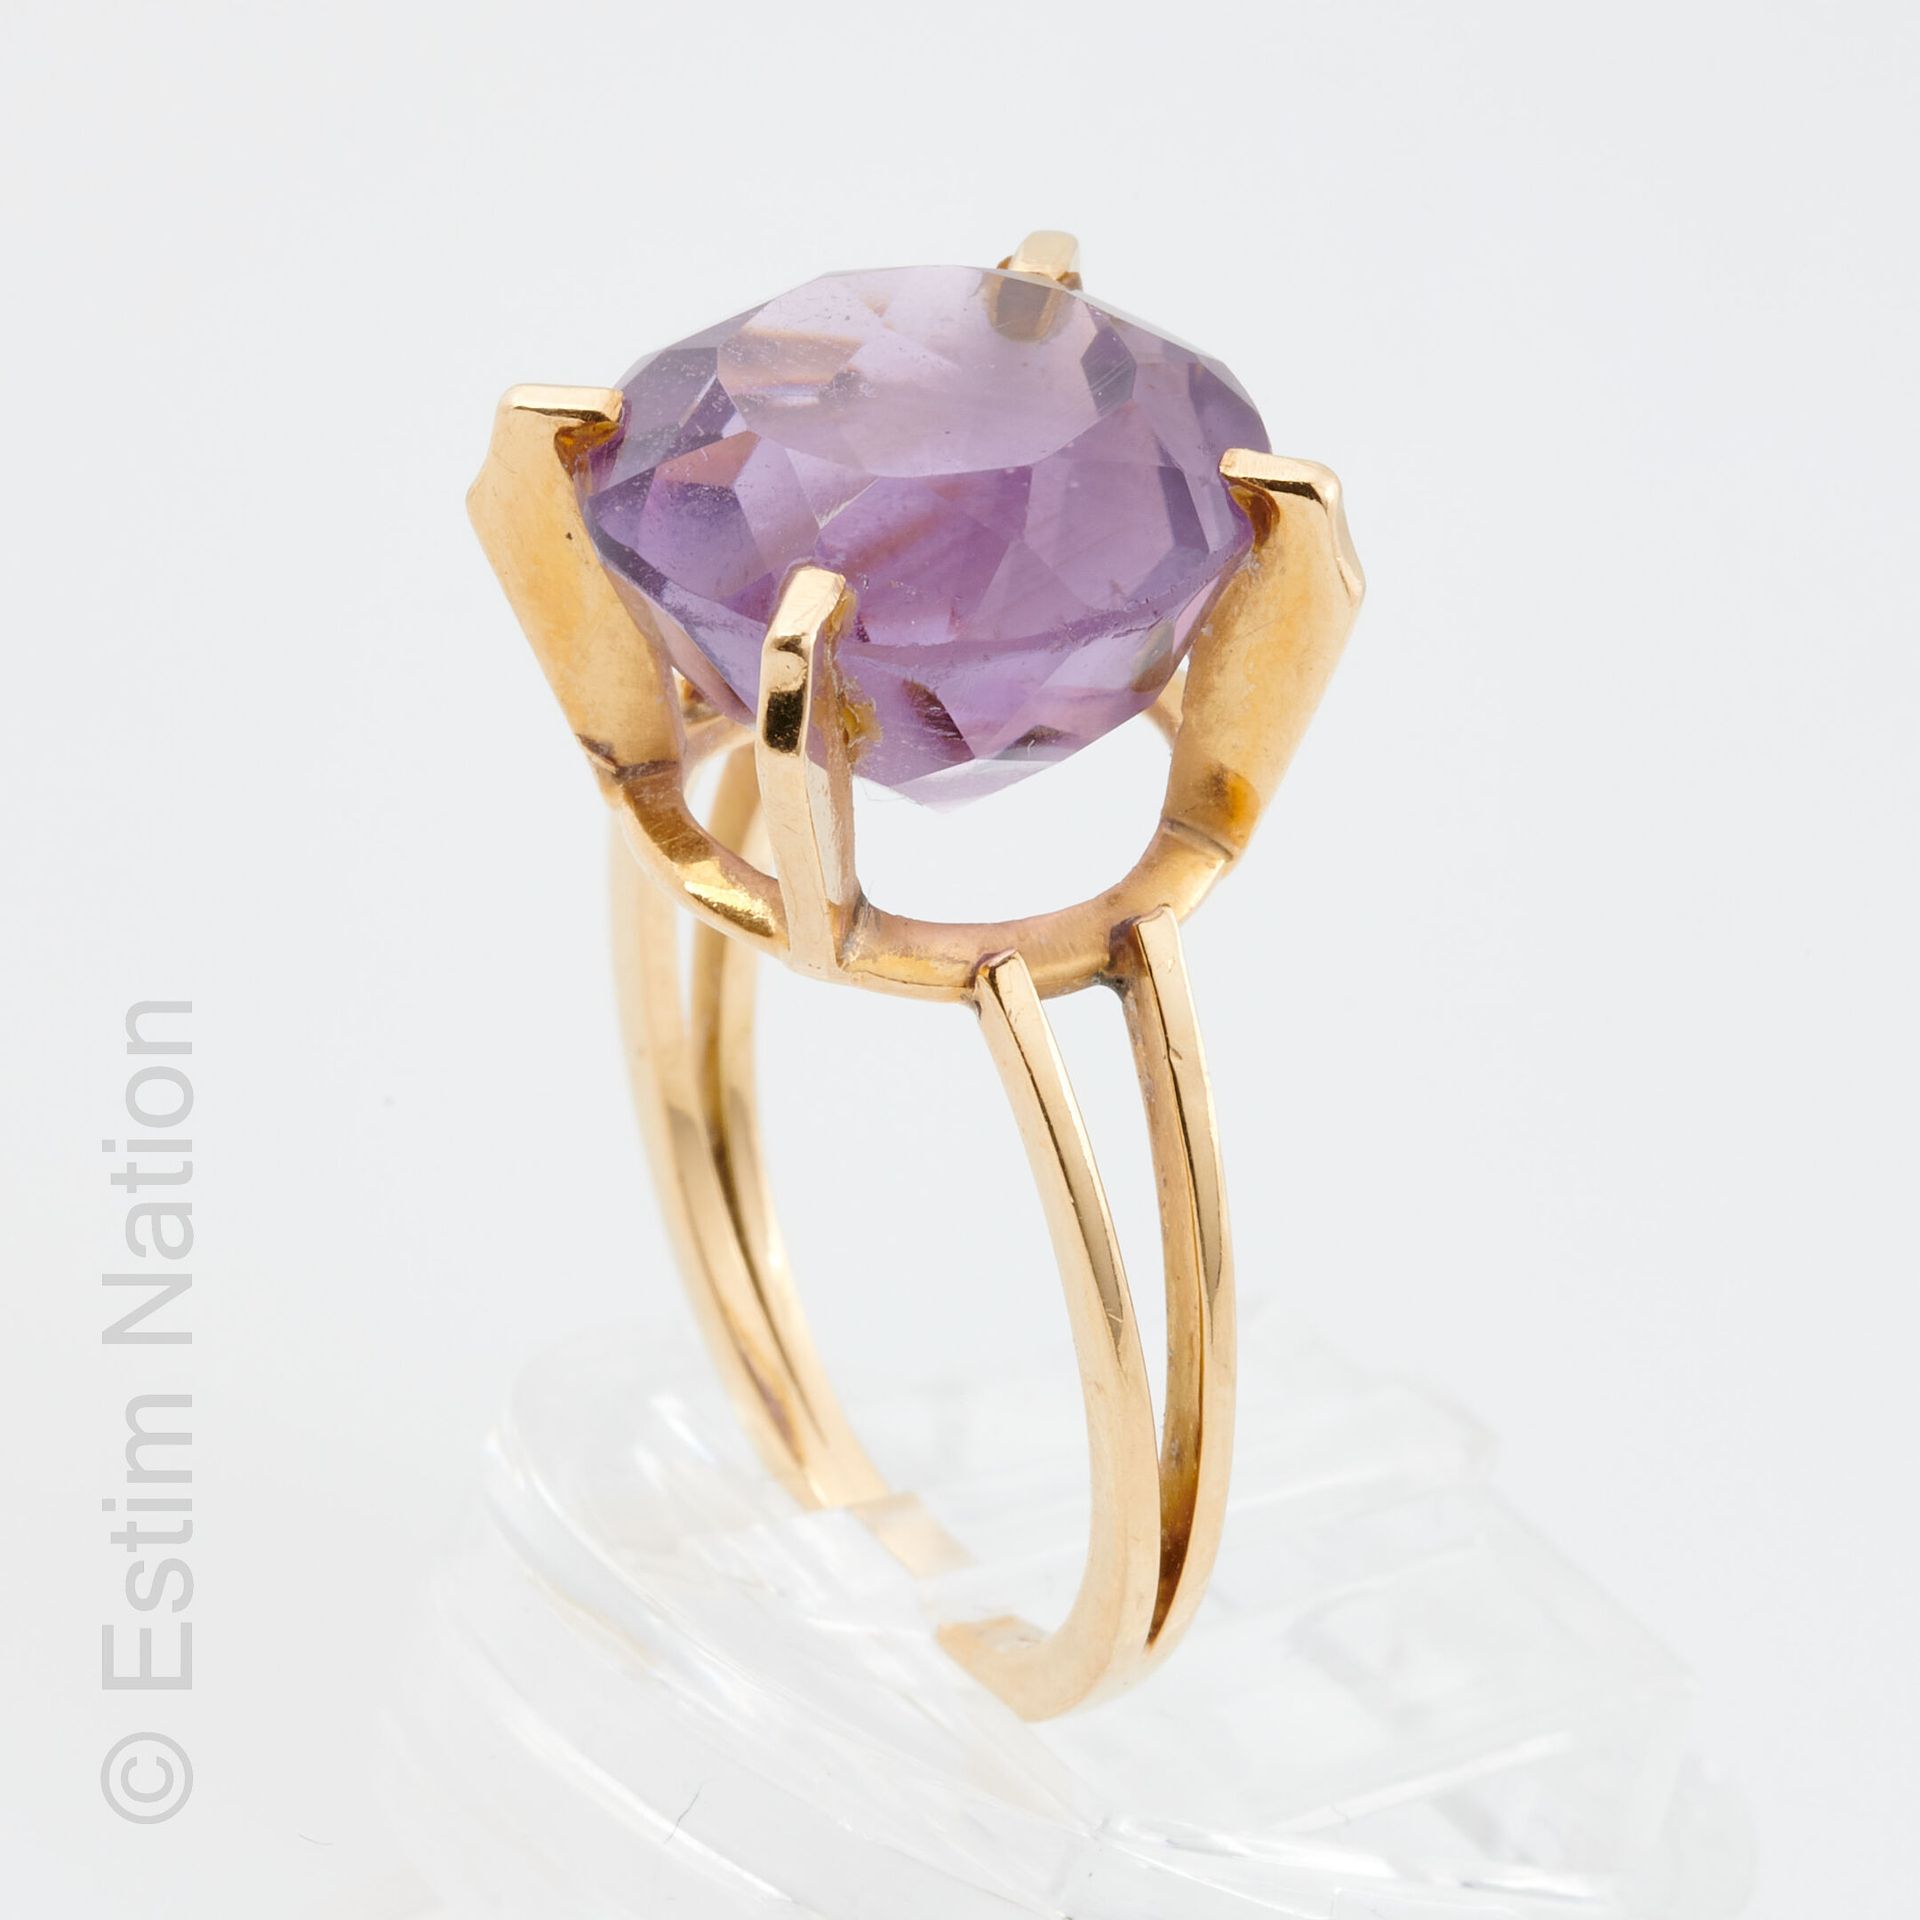 BAGUE OR JAUNE ET AMETHYSTE 18K（750千分之一）黄金戒指，四爪镶嵌圆形刻面紫水晶。紫水晶的尺寸：13.3 x 13.2 x 9.&hellip;